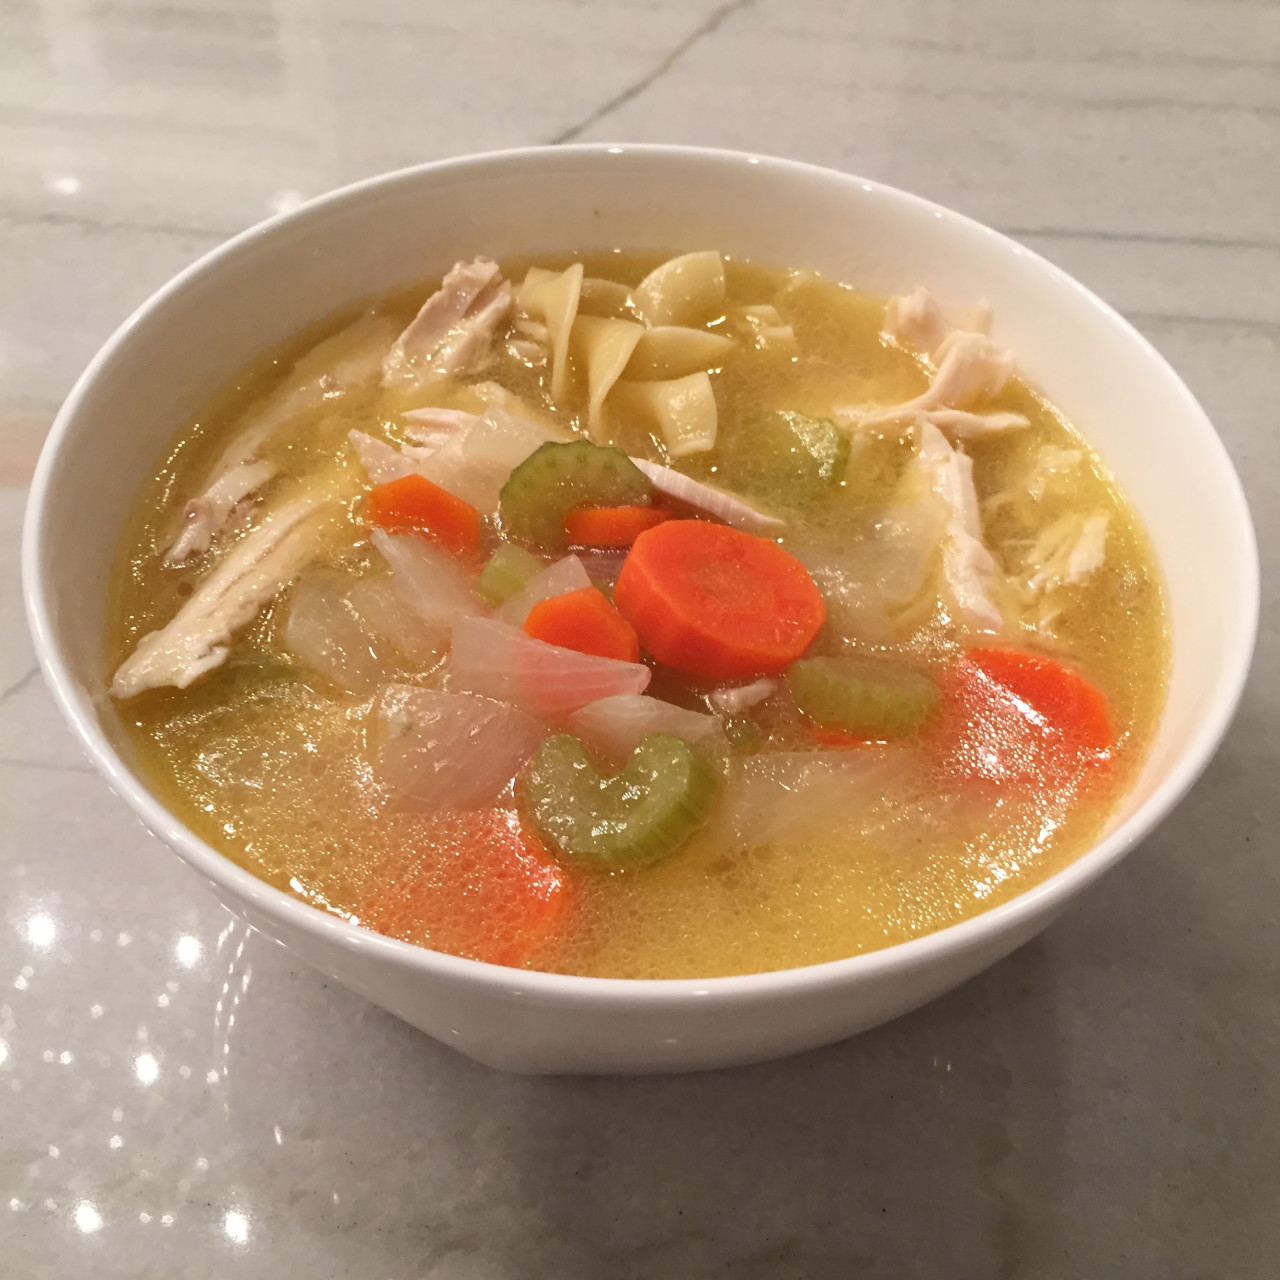 https://bigoven-res.cloudinary.com/image/upload/t_recipe-1280/moms-chicken-noodle-soup-97cca1.jpg